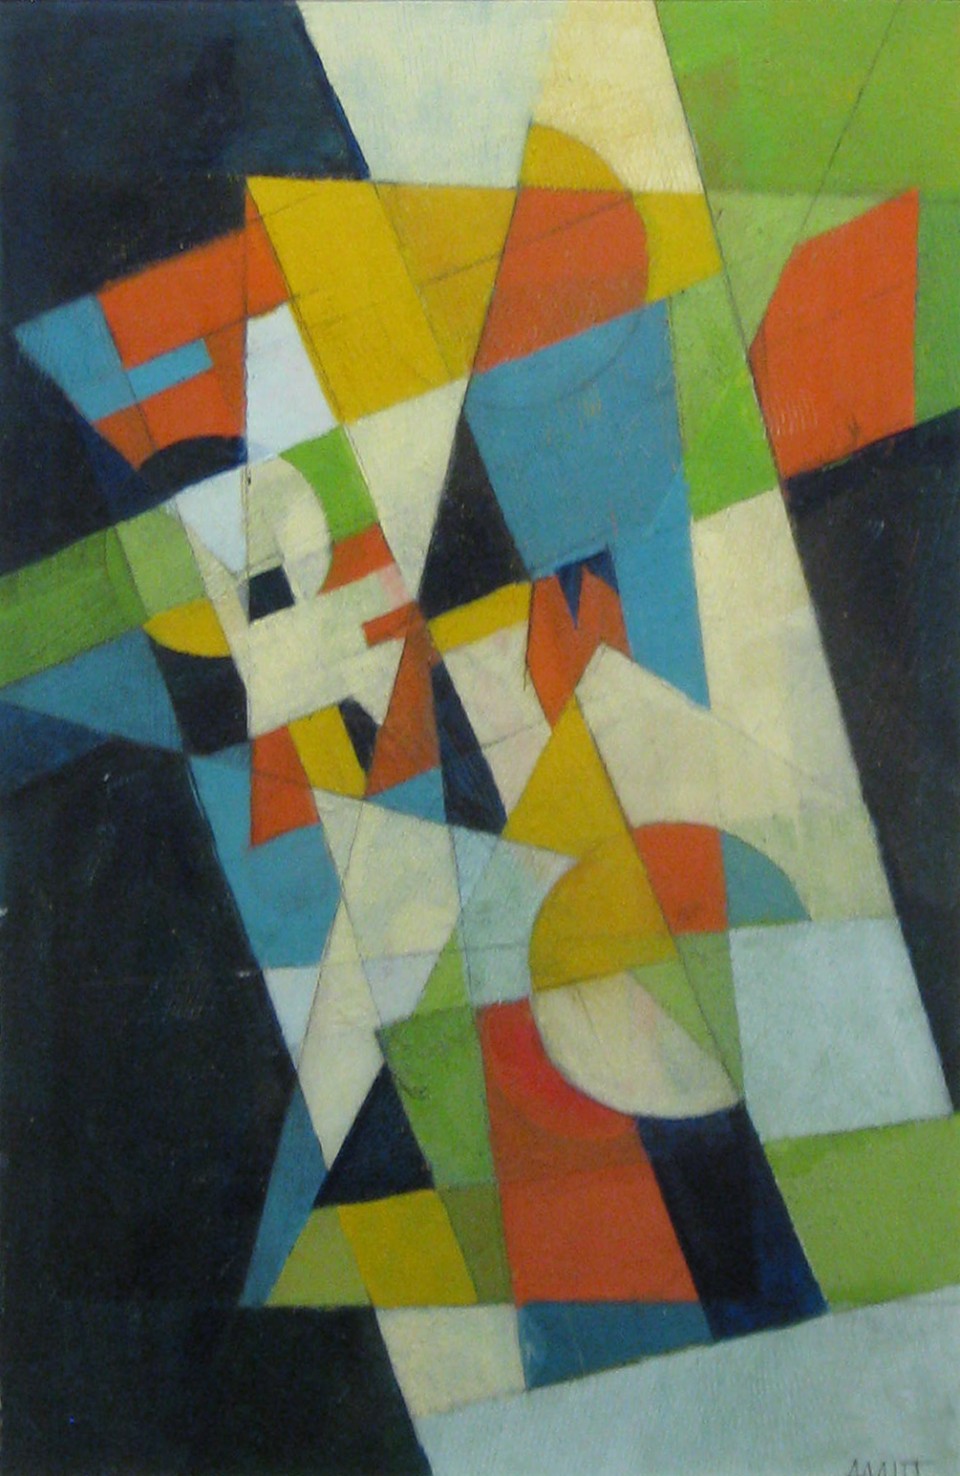 Homage to Kandinsky, 2011
acrylic
19.75 x 12.75
